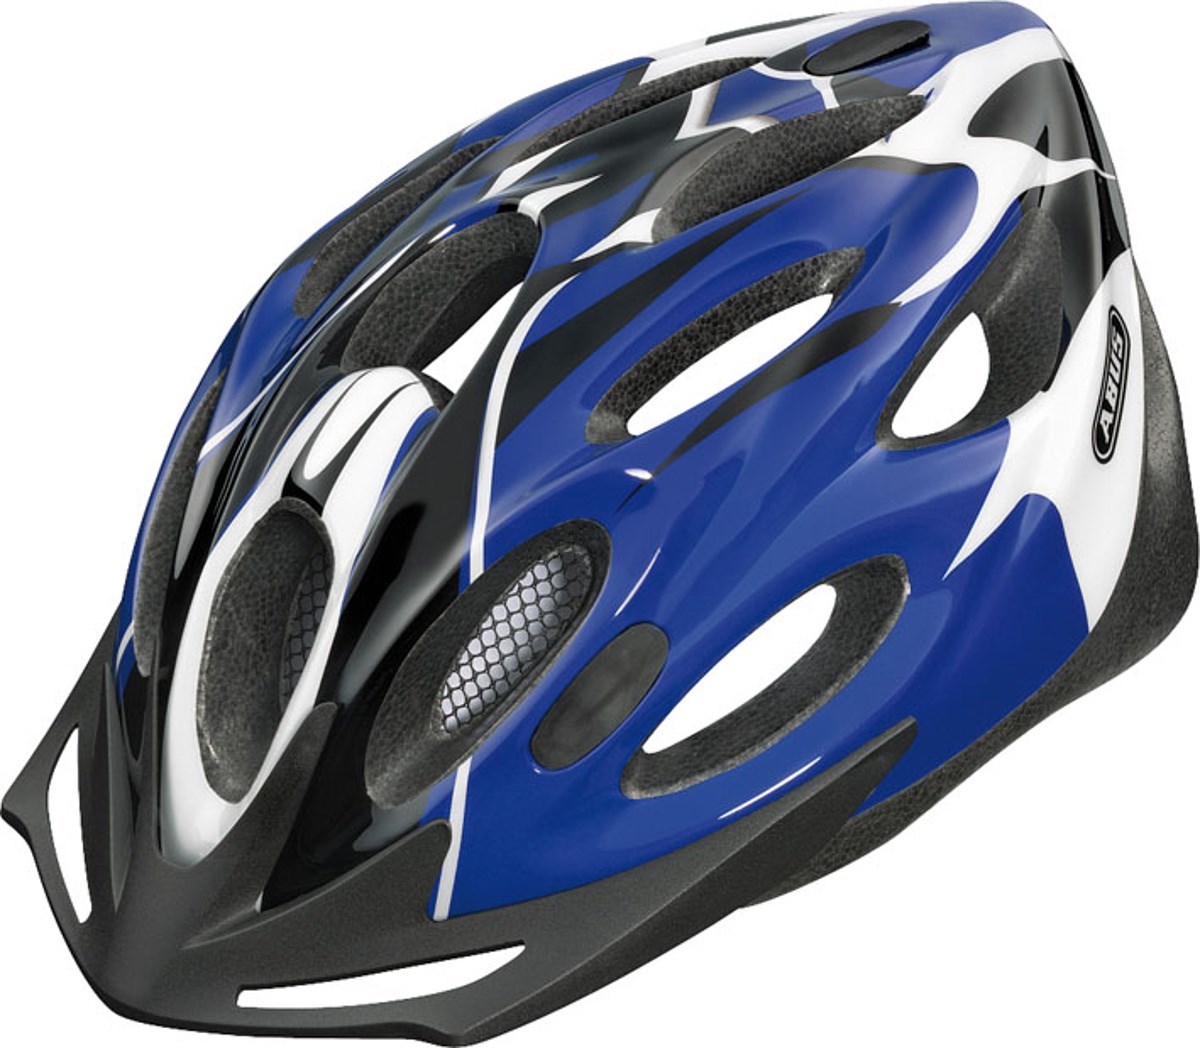 Abus Raxtor MTB Cycling Helmet product image